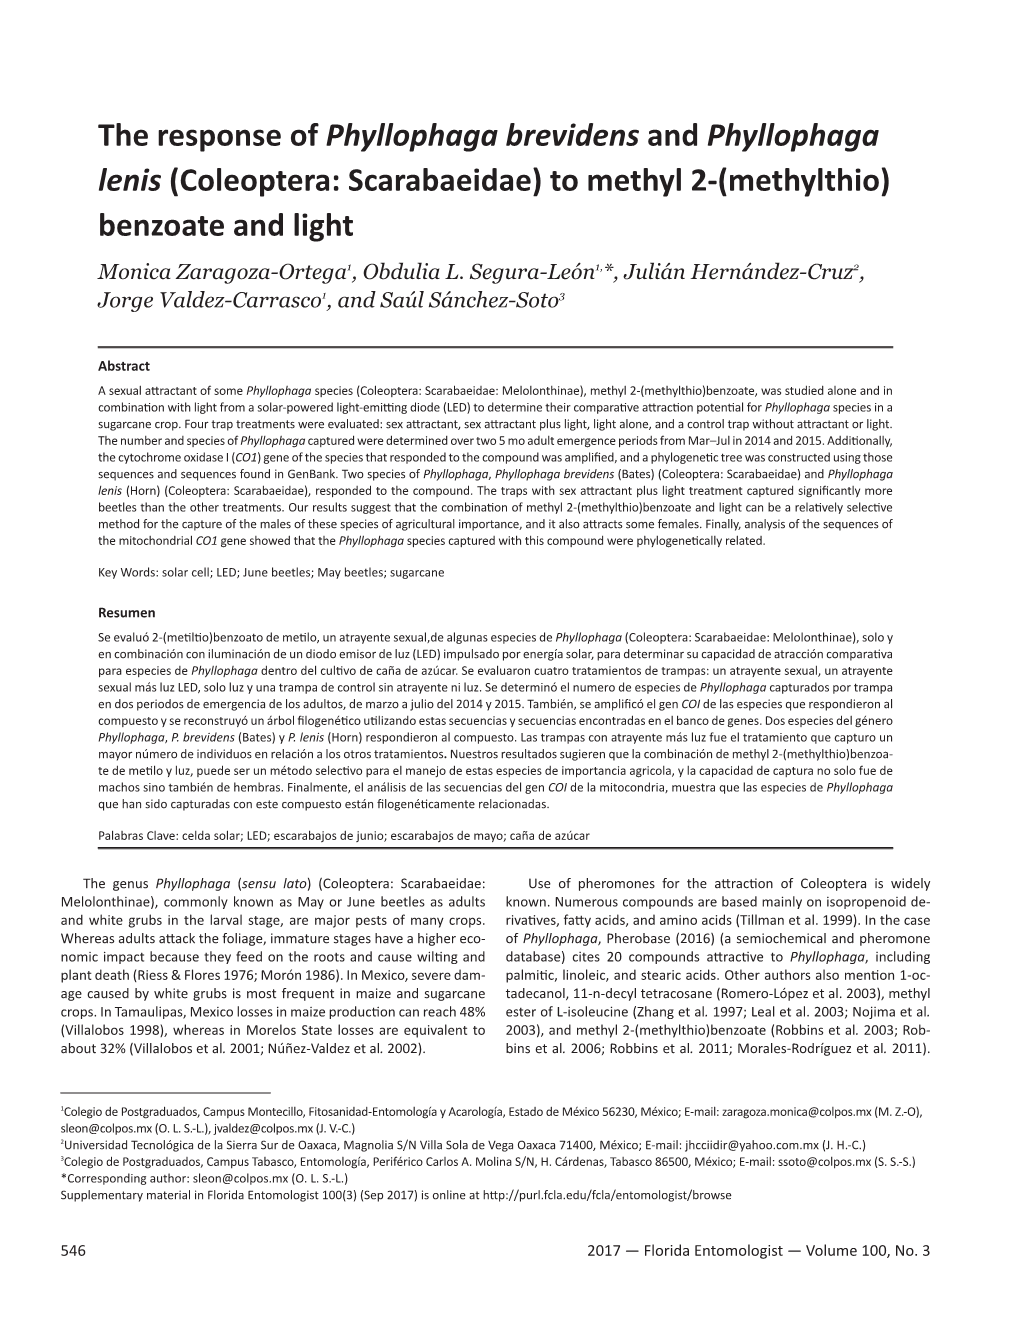 (Coleoptera: Scarabaeidae) to Methyl 2-(Methylthio) Benzoate and Light